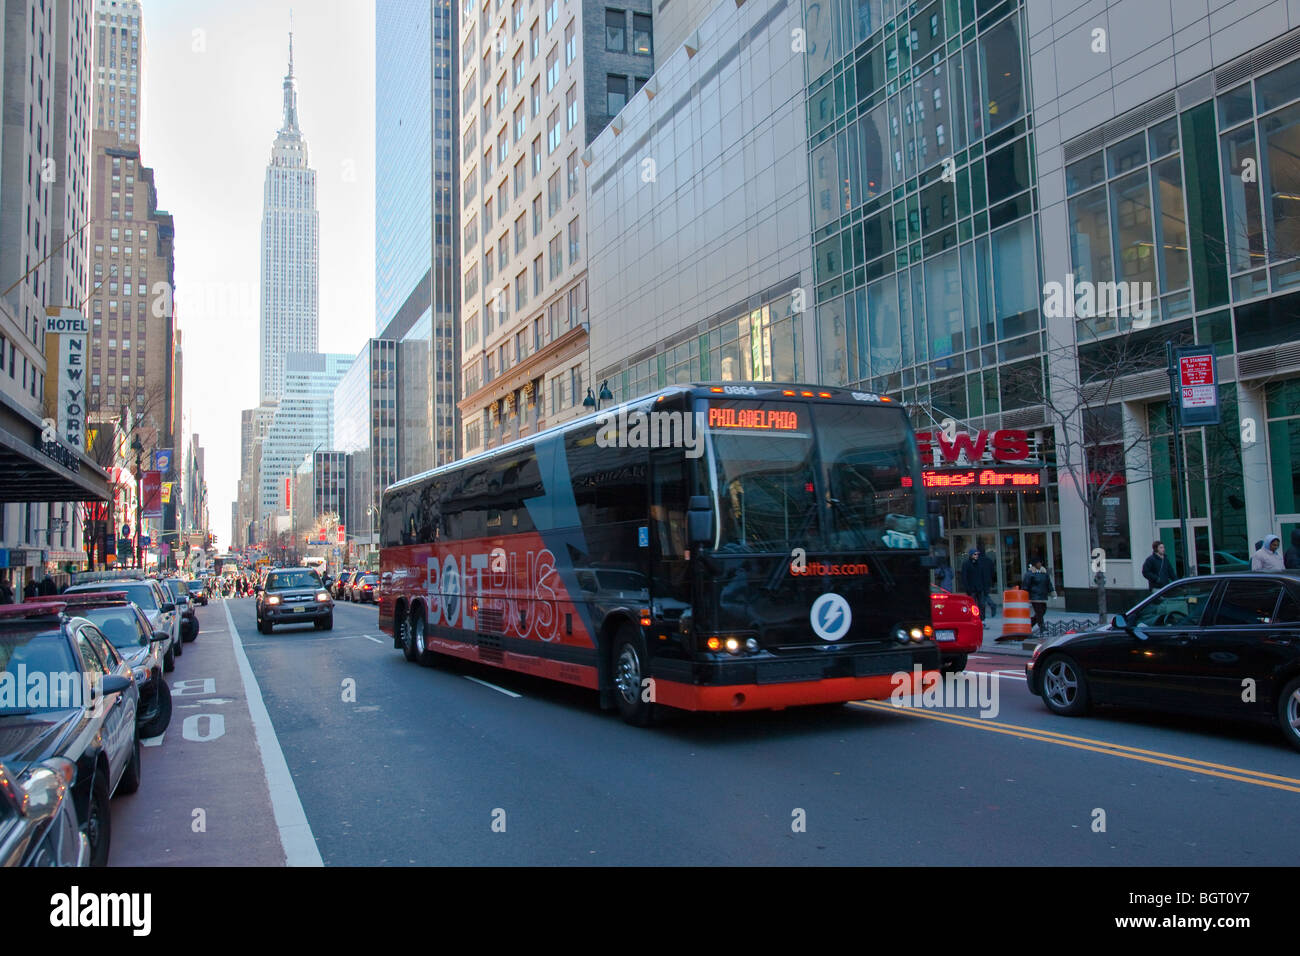 Bolt bus Philidelphia - New York City in New York Stock Photo